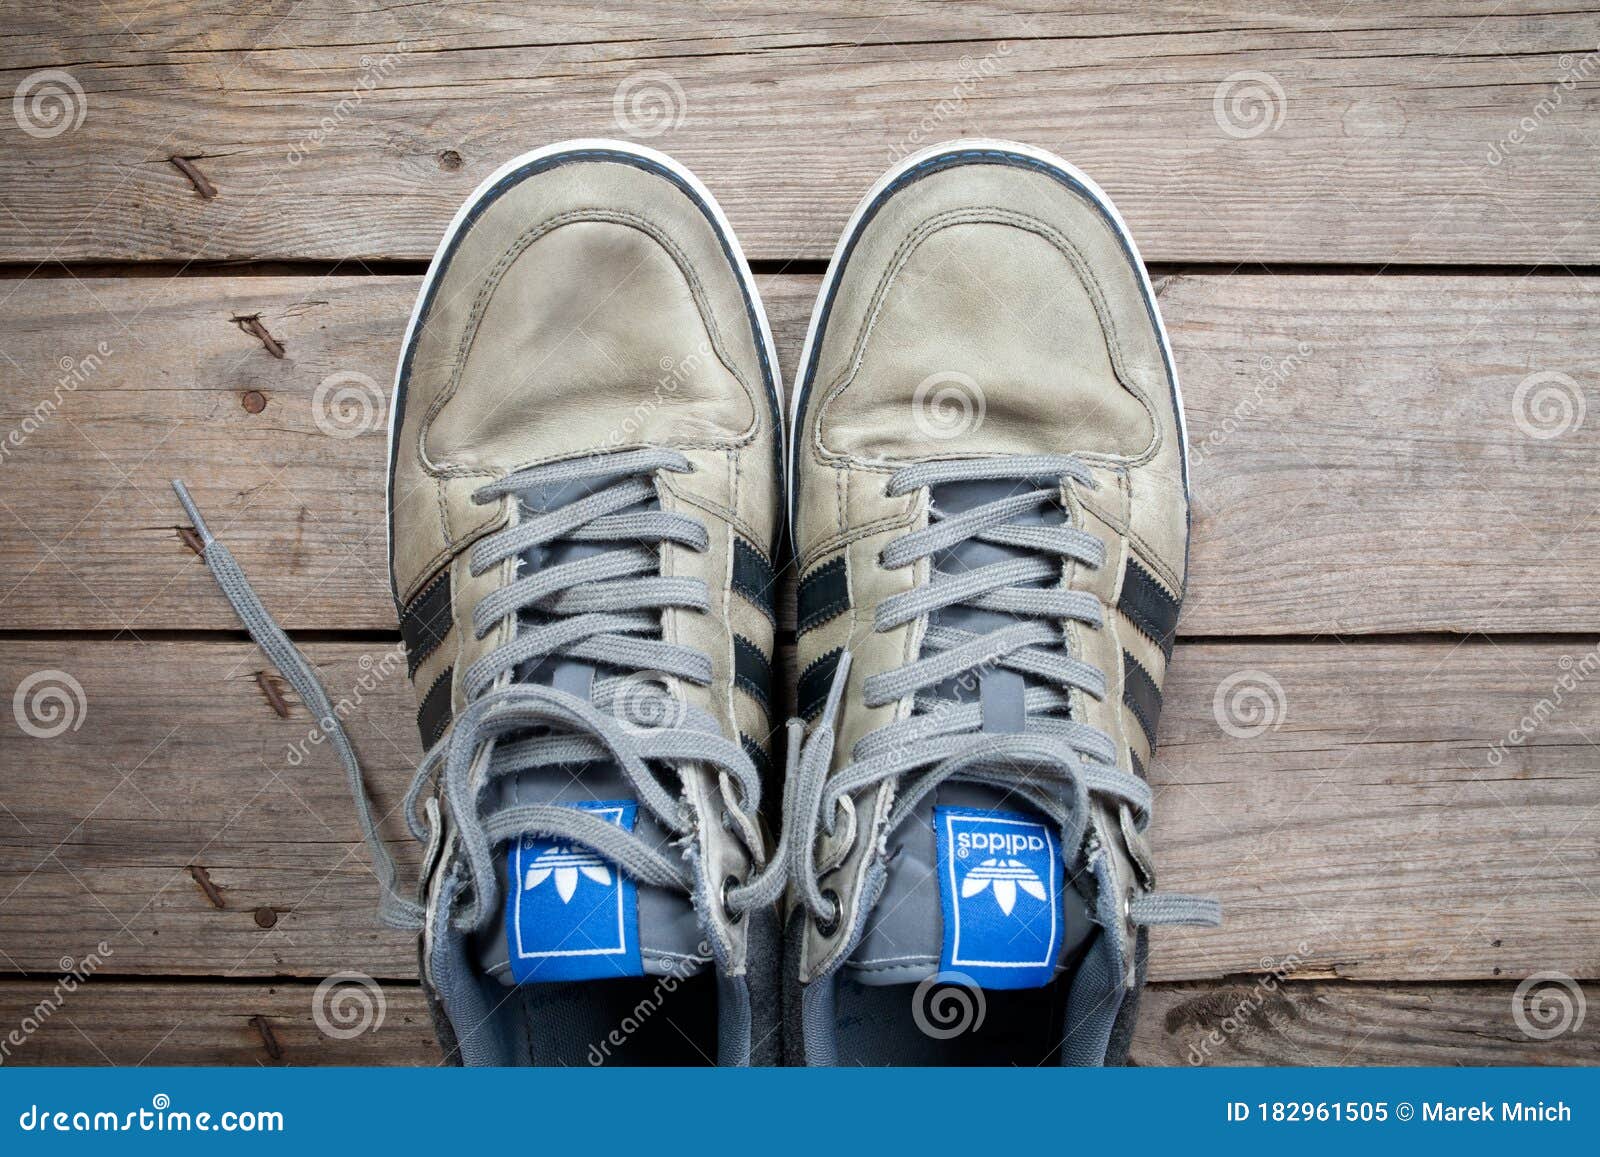 Zapatos adidas usados imagen editorial. Imagen de 182961505